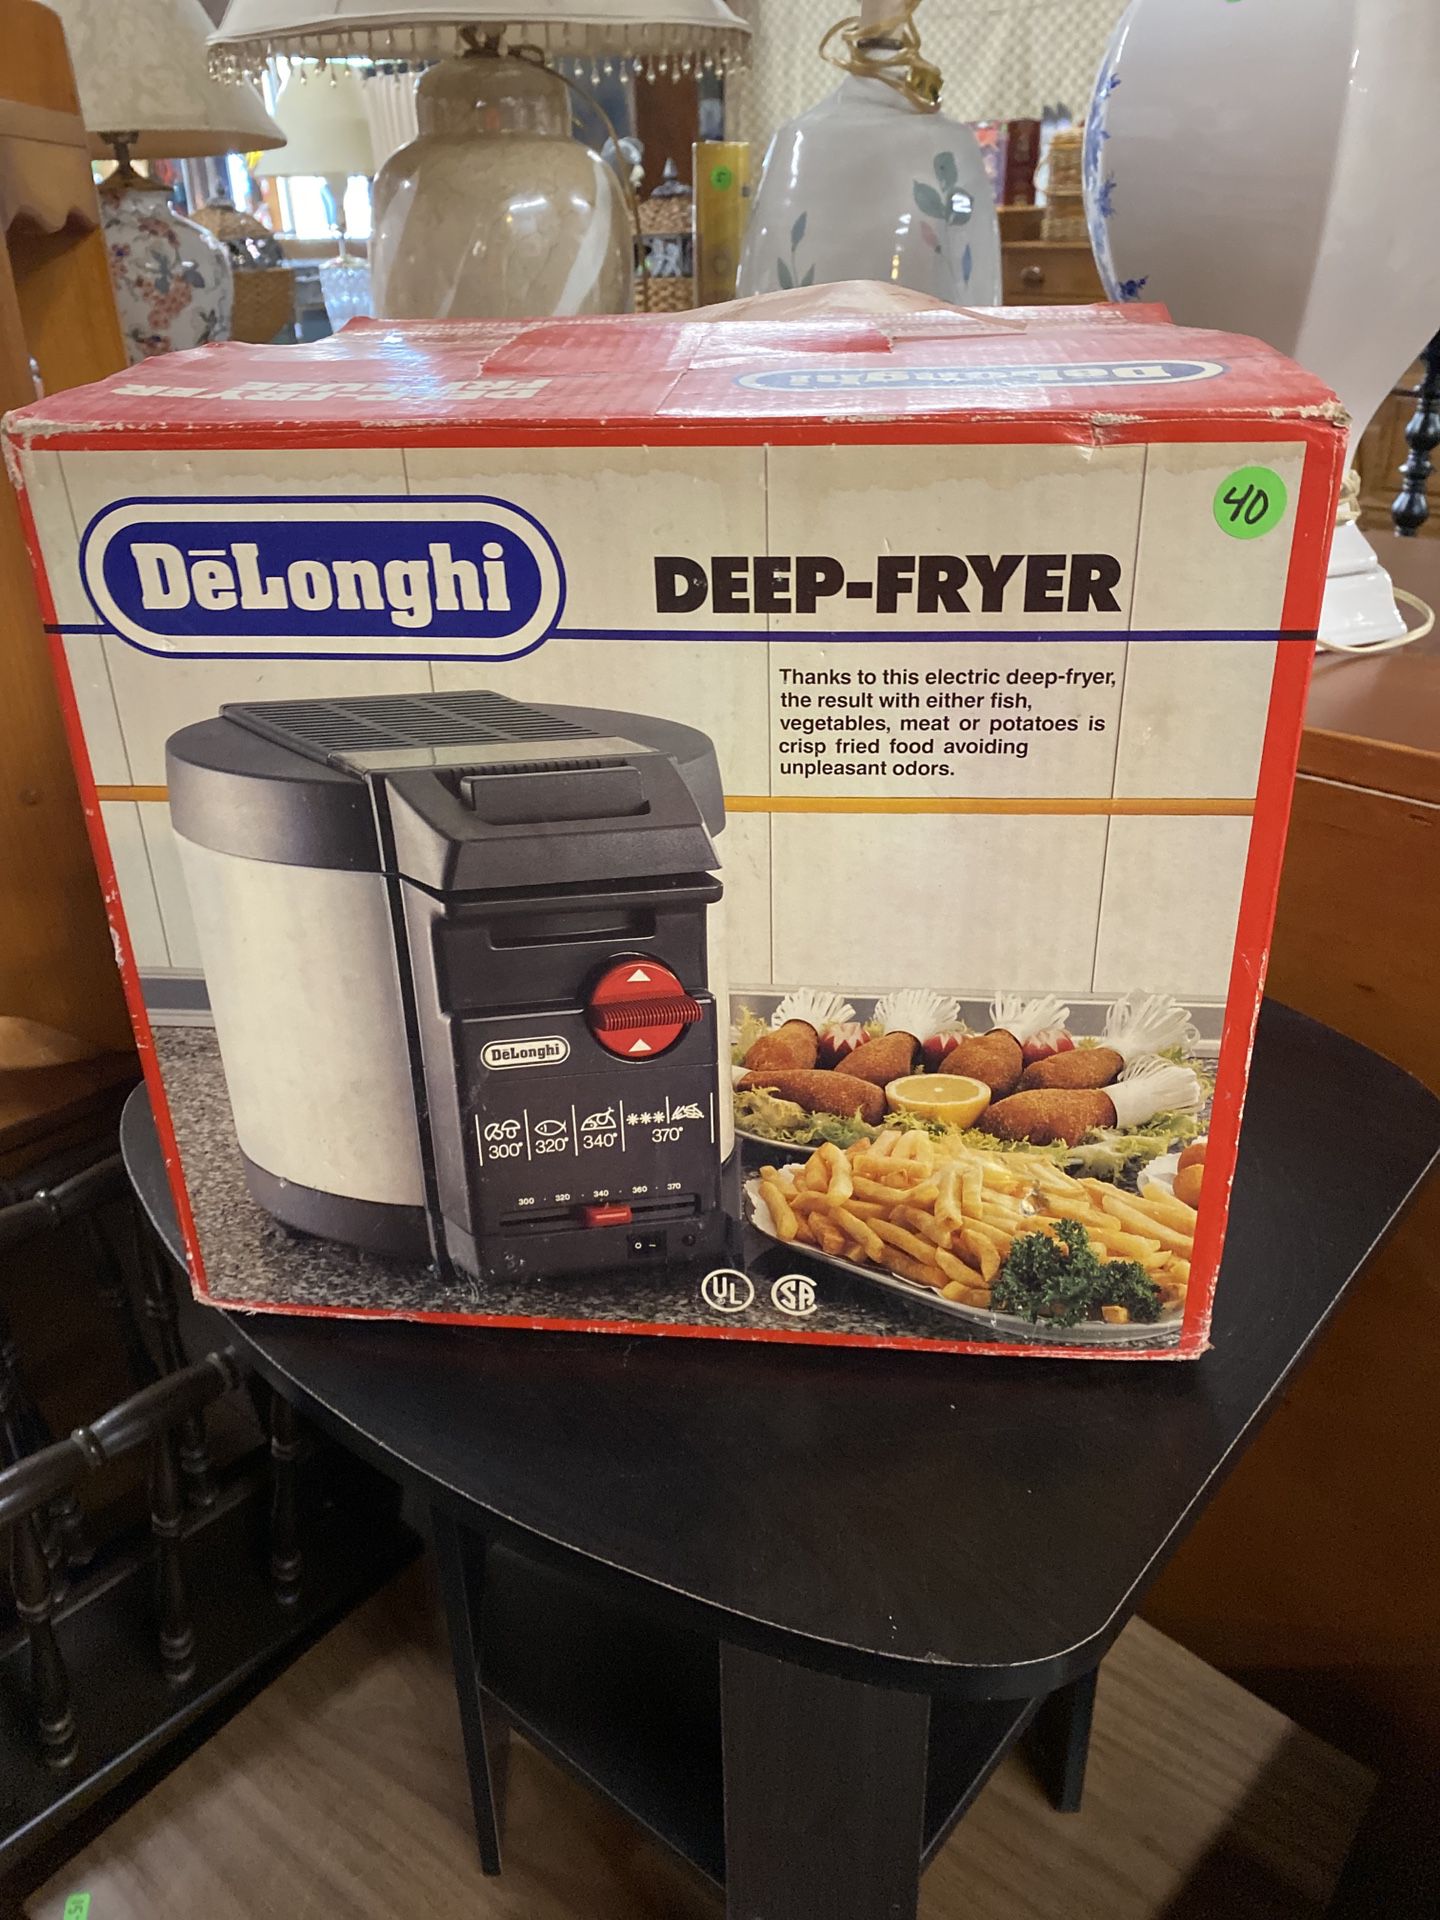 OR27 DeLonghi Electric Deep-Fryer